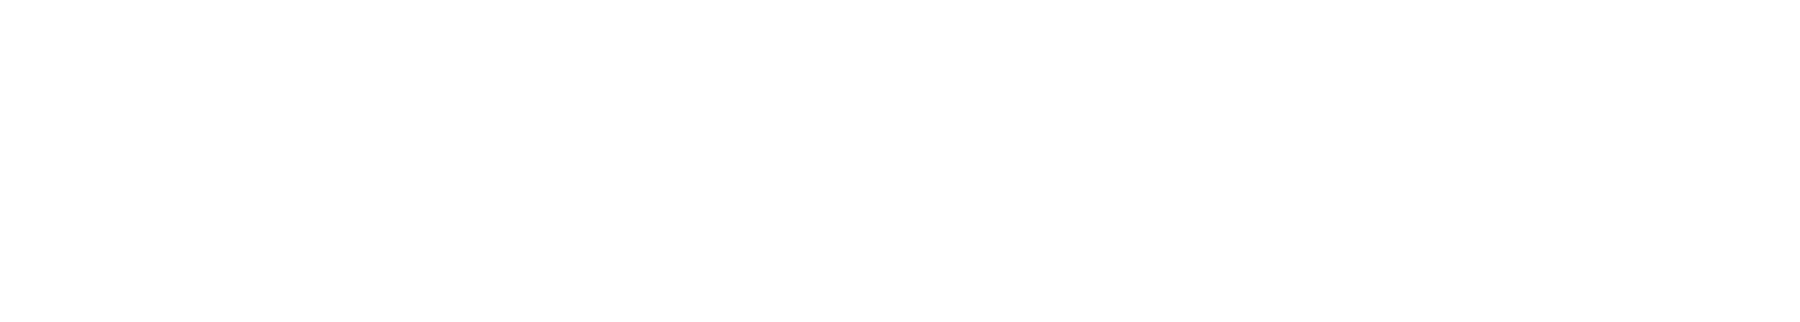 Manpower group and LeadDesk logo